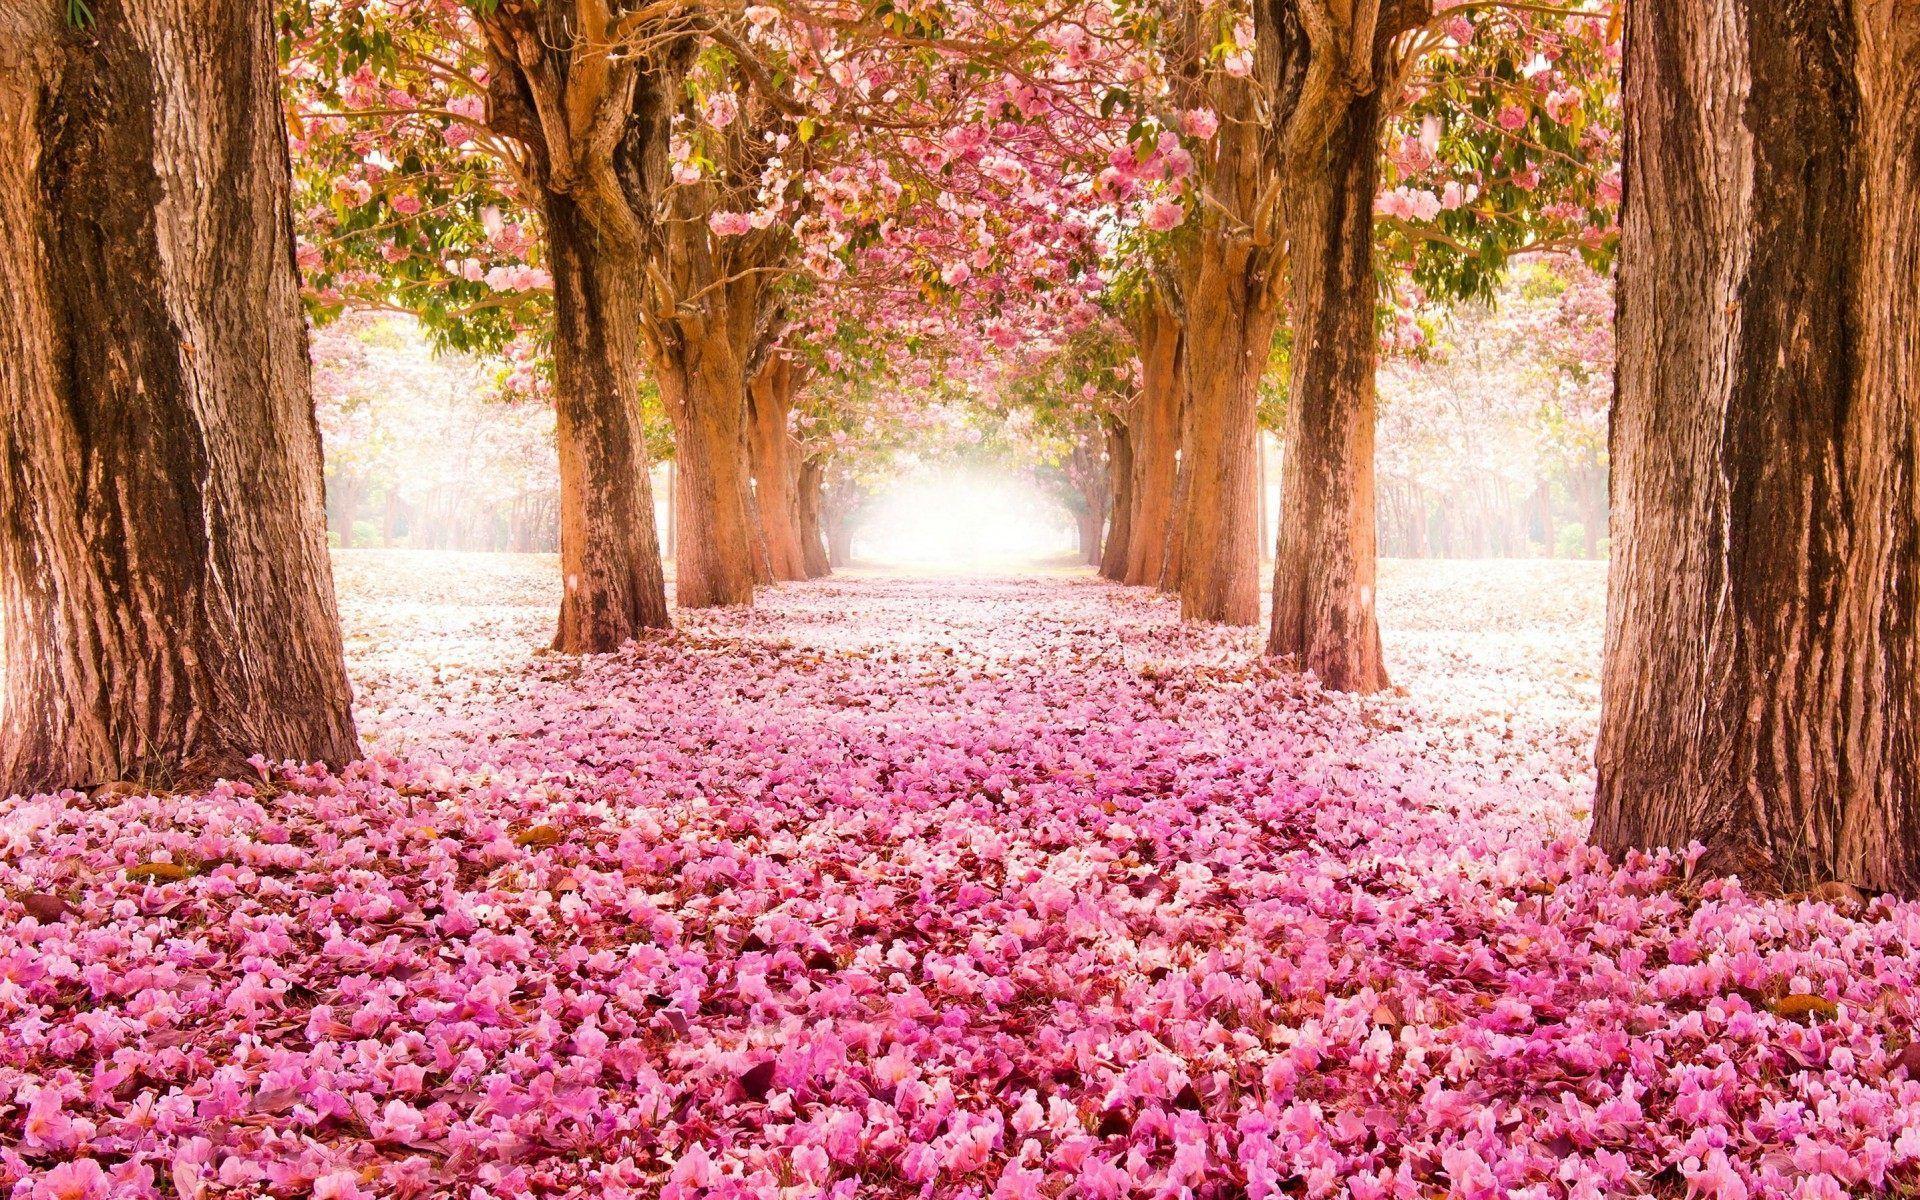 Spring flowers wallpaper HD. Wallpaper, Background, Image. Spring wallpaper, Tree tunnel, Cherry blossom wallpaper